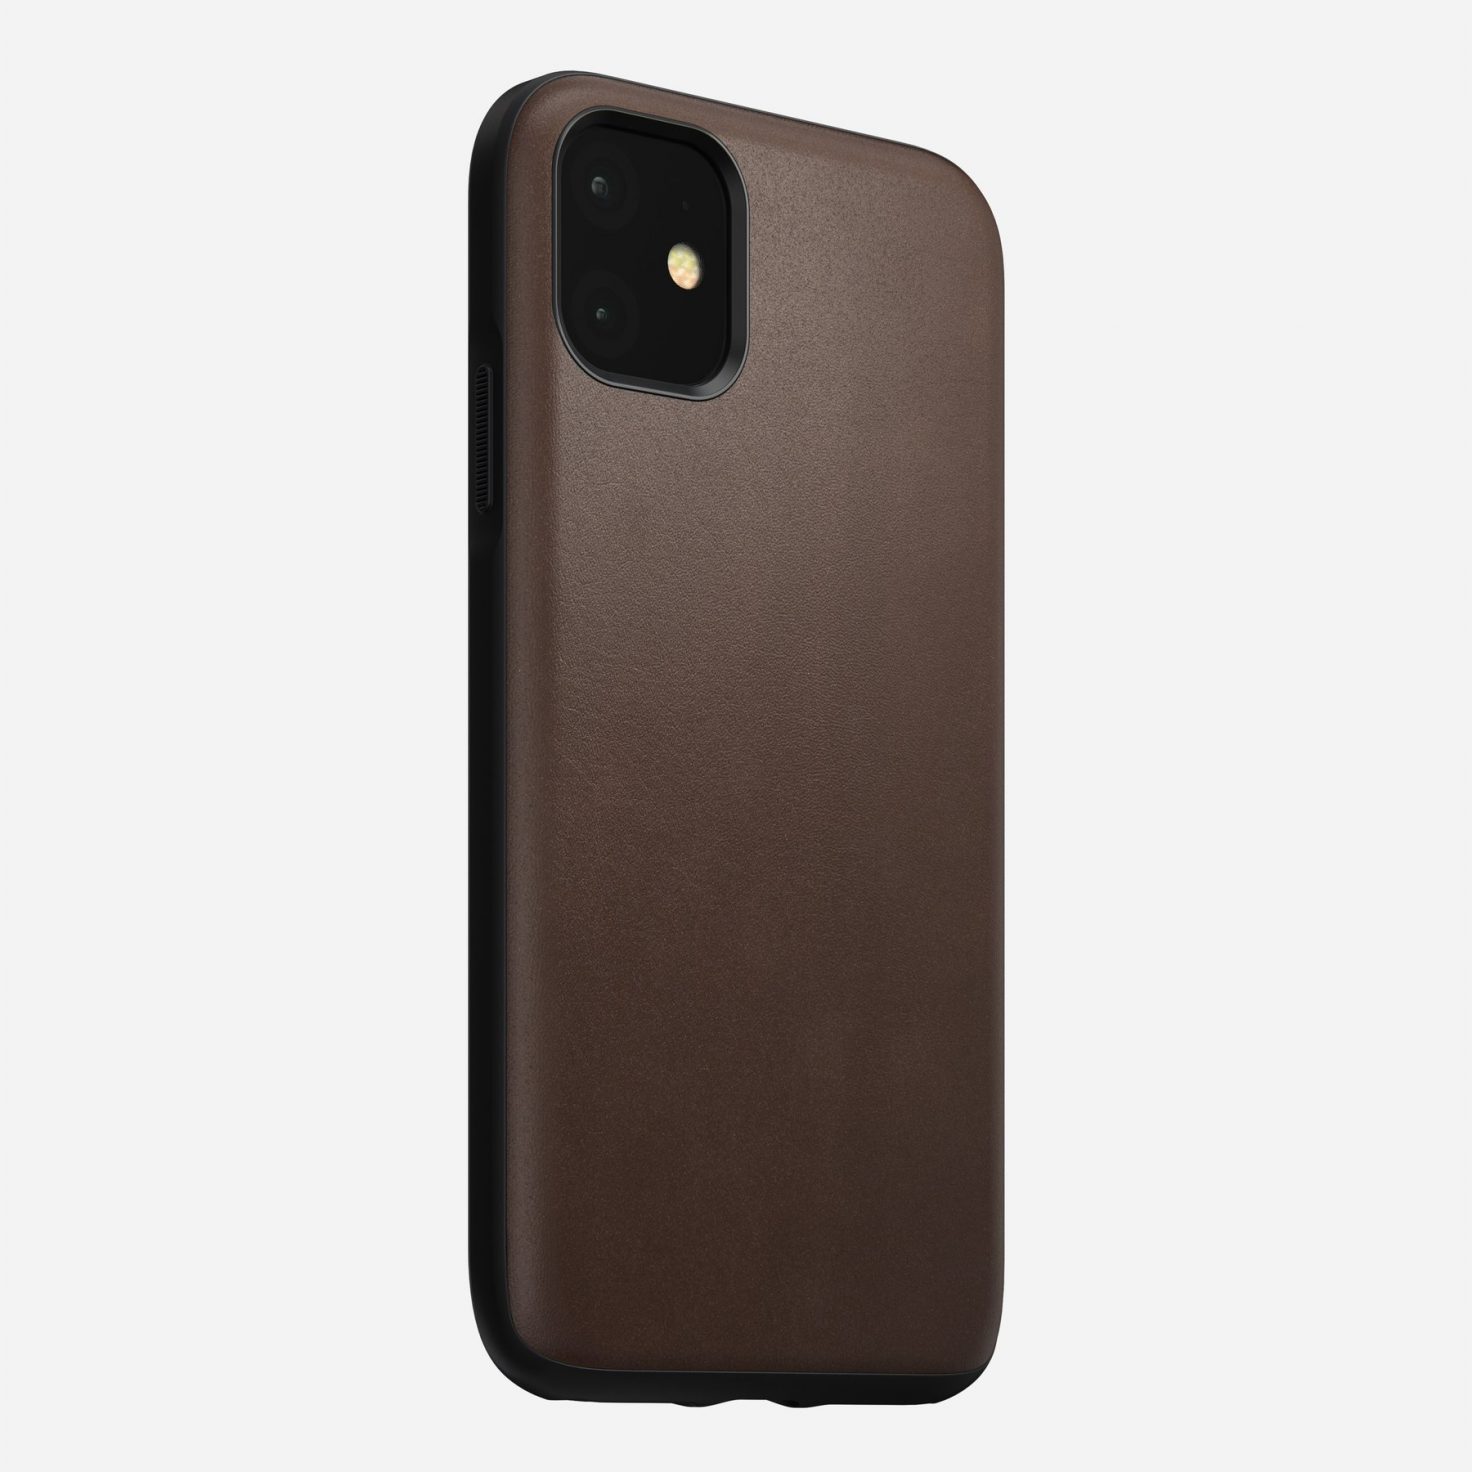 Nomad-iPhone-11-leather-case-1472×1472